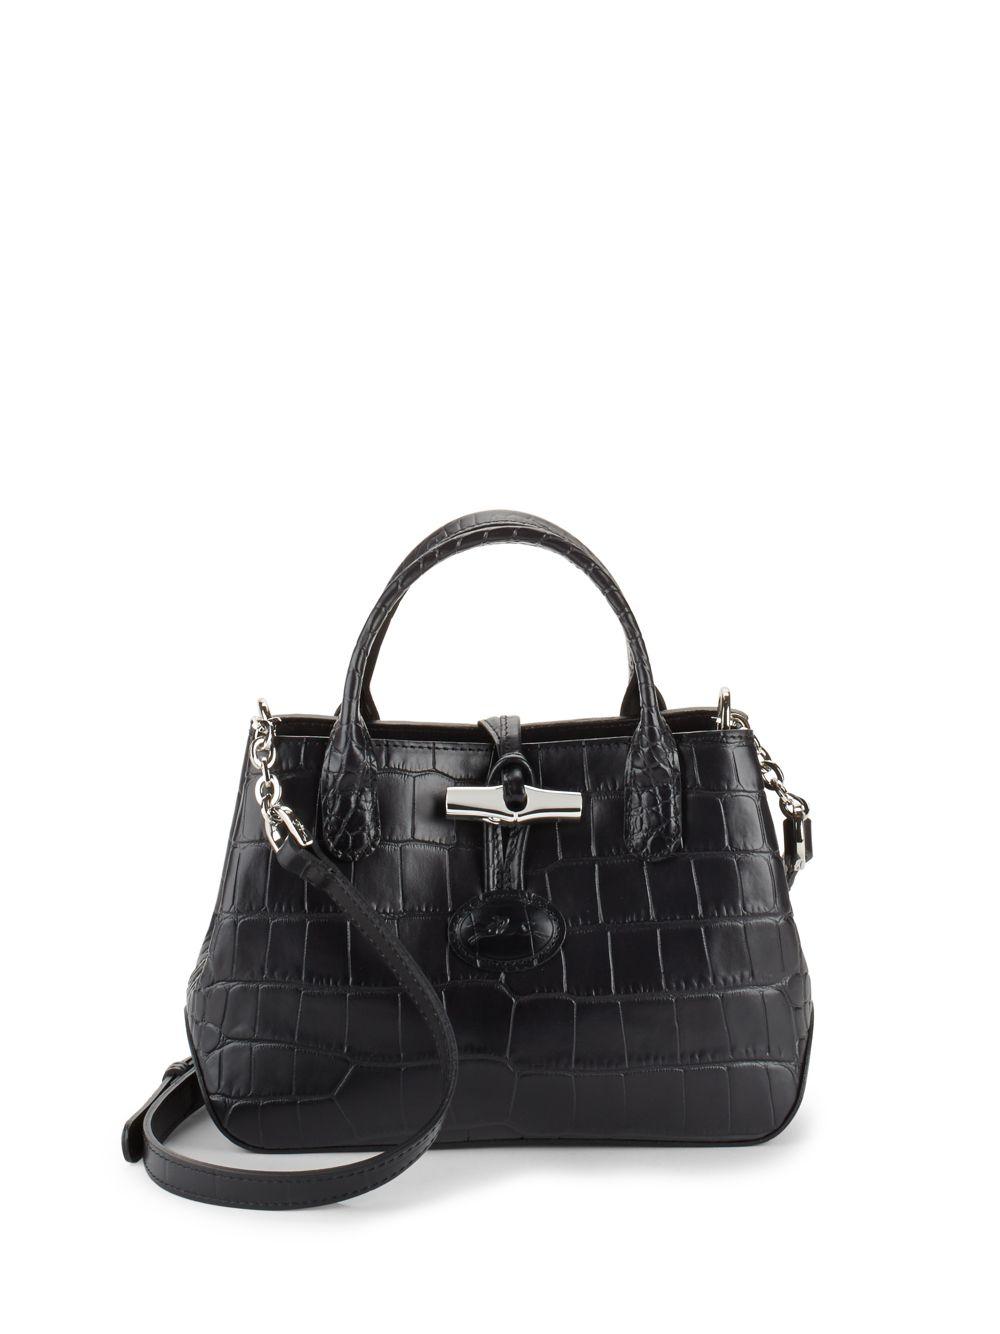 Longchamp Small Roseau Leather Tote Bag - Black